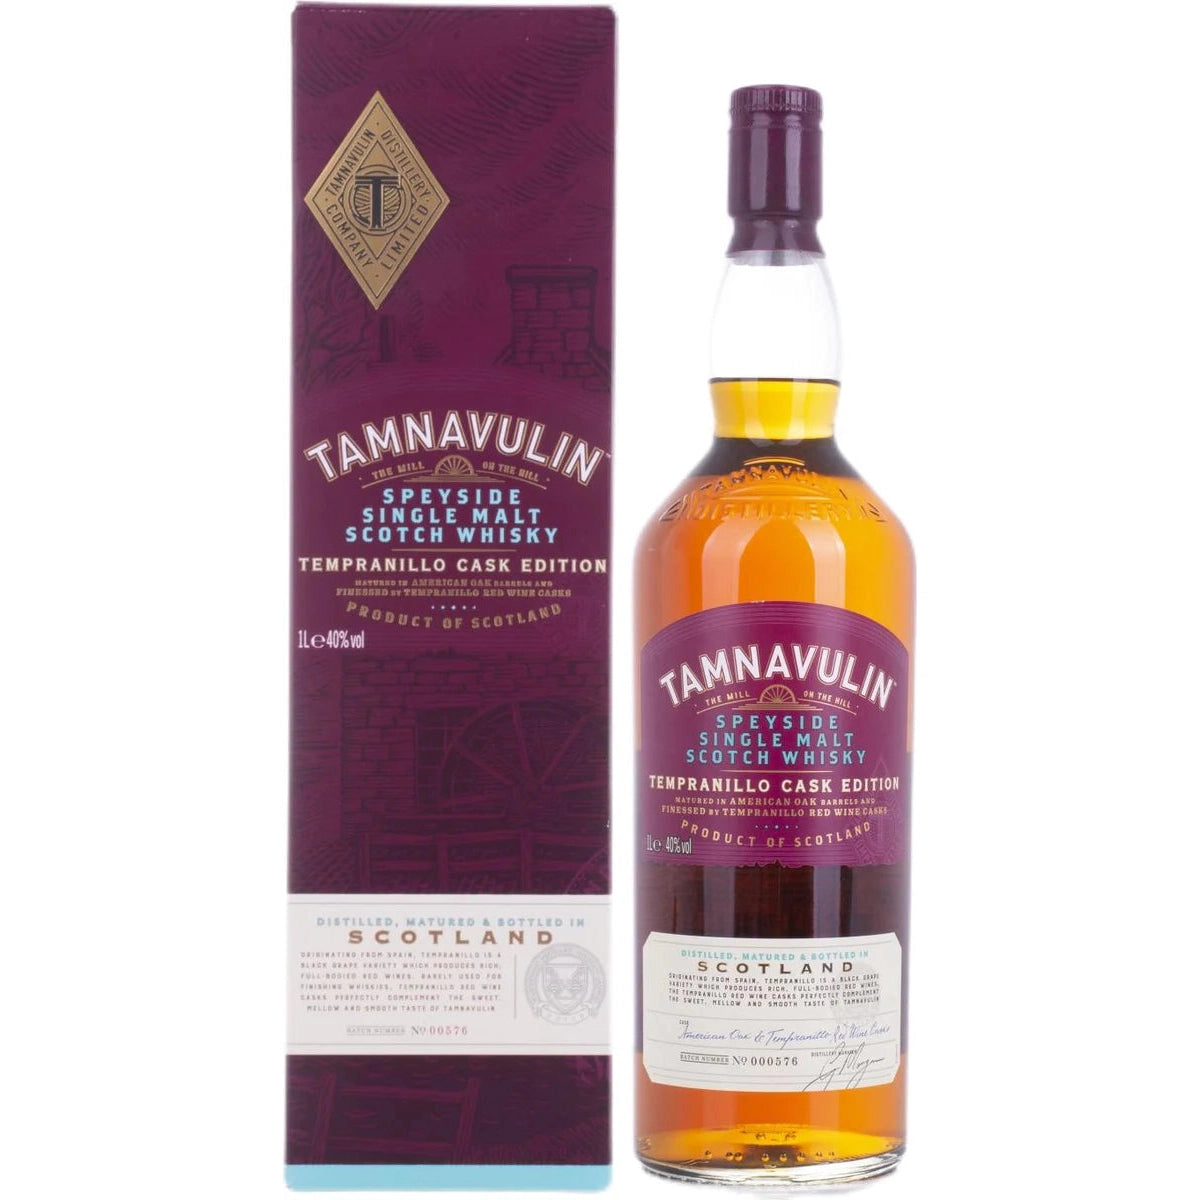 Tamnavulin TEMPRANILLO CASK Speyside Single Malt Scotch Whisky 40% Vol. 1l in Giftbox